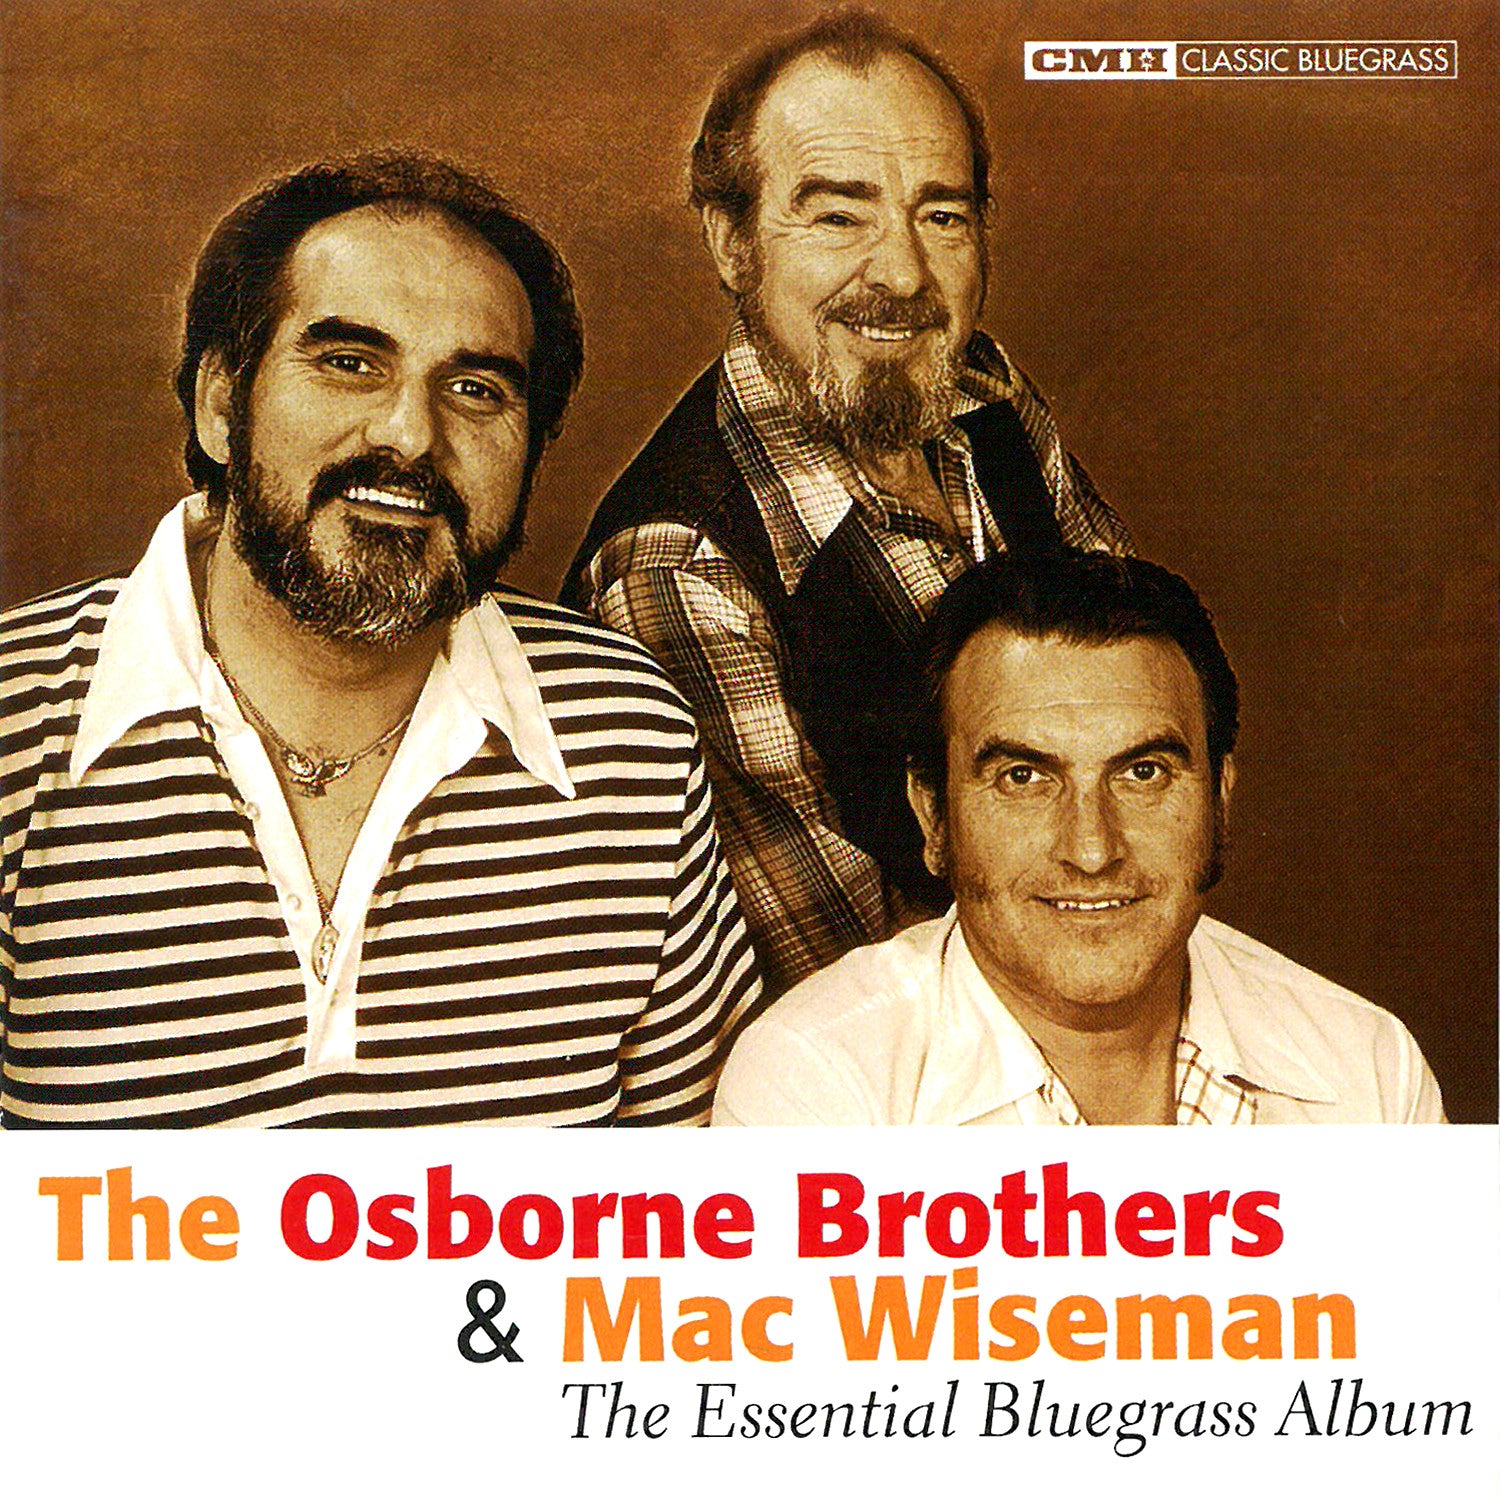 The Osborne Brothers & Mac Wiseman: The Essential Bluegrass Album